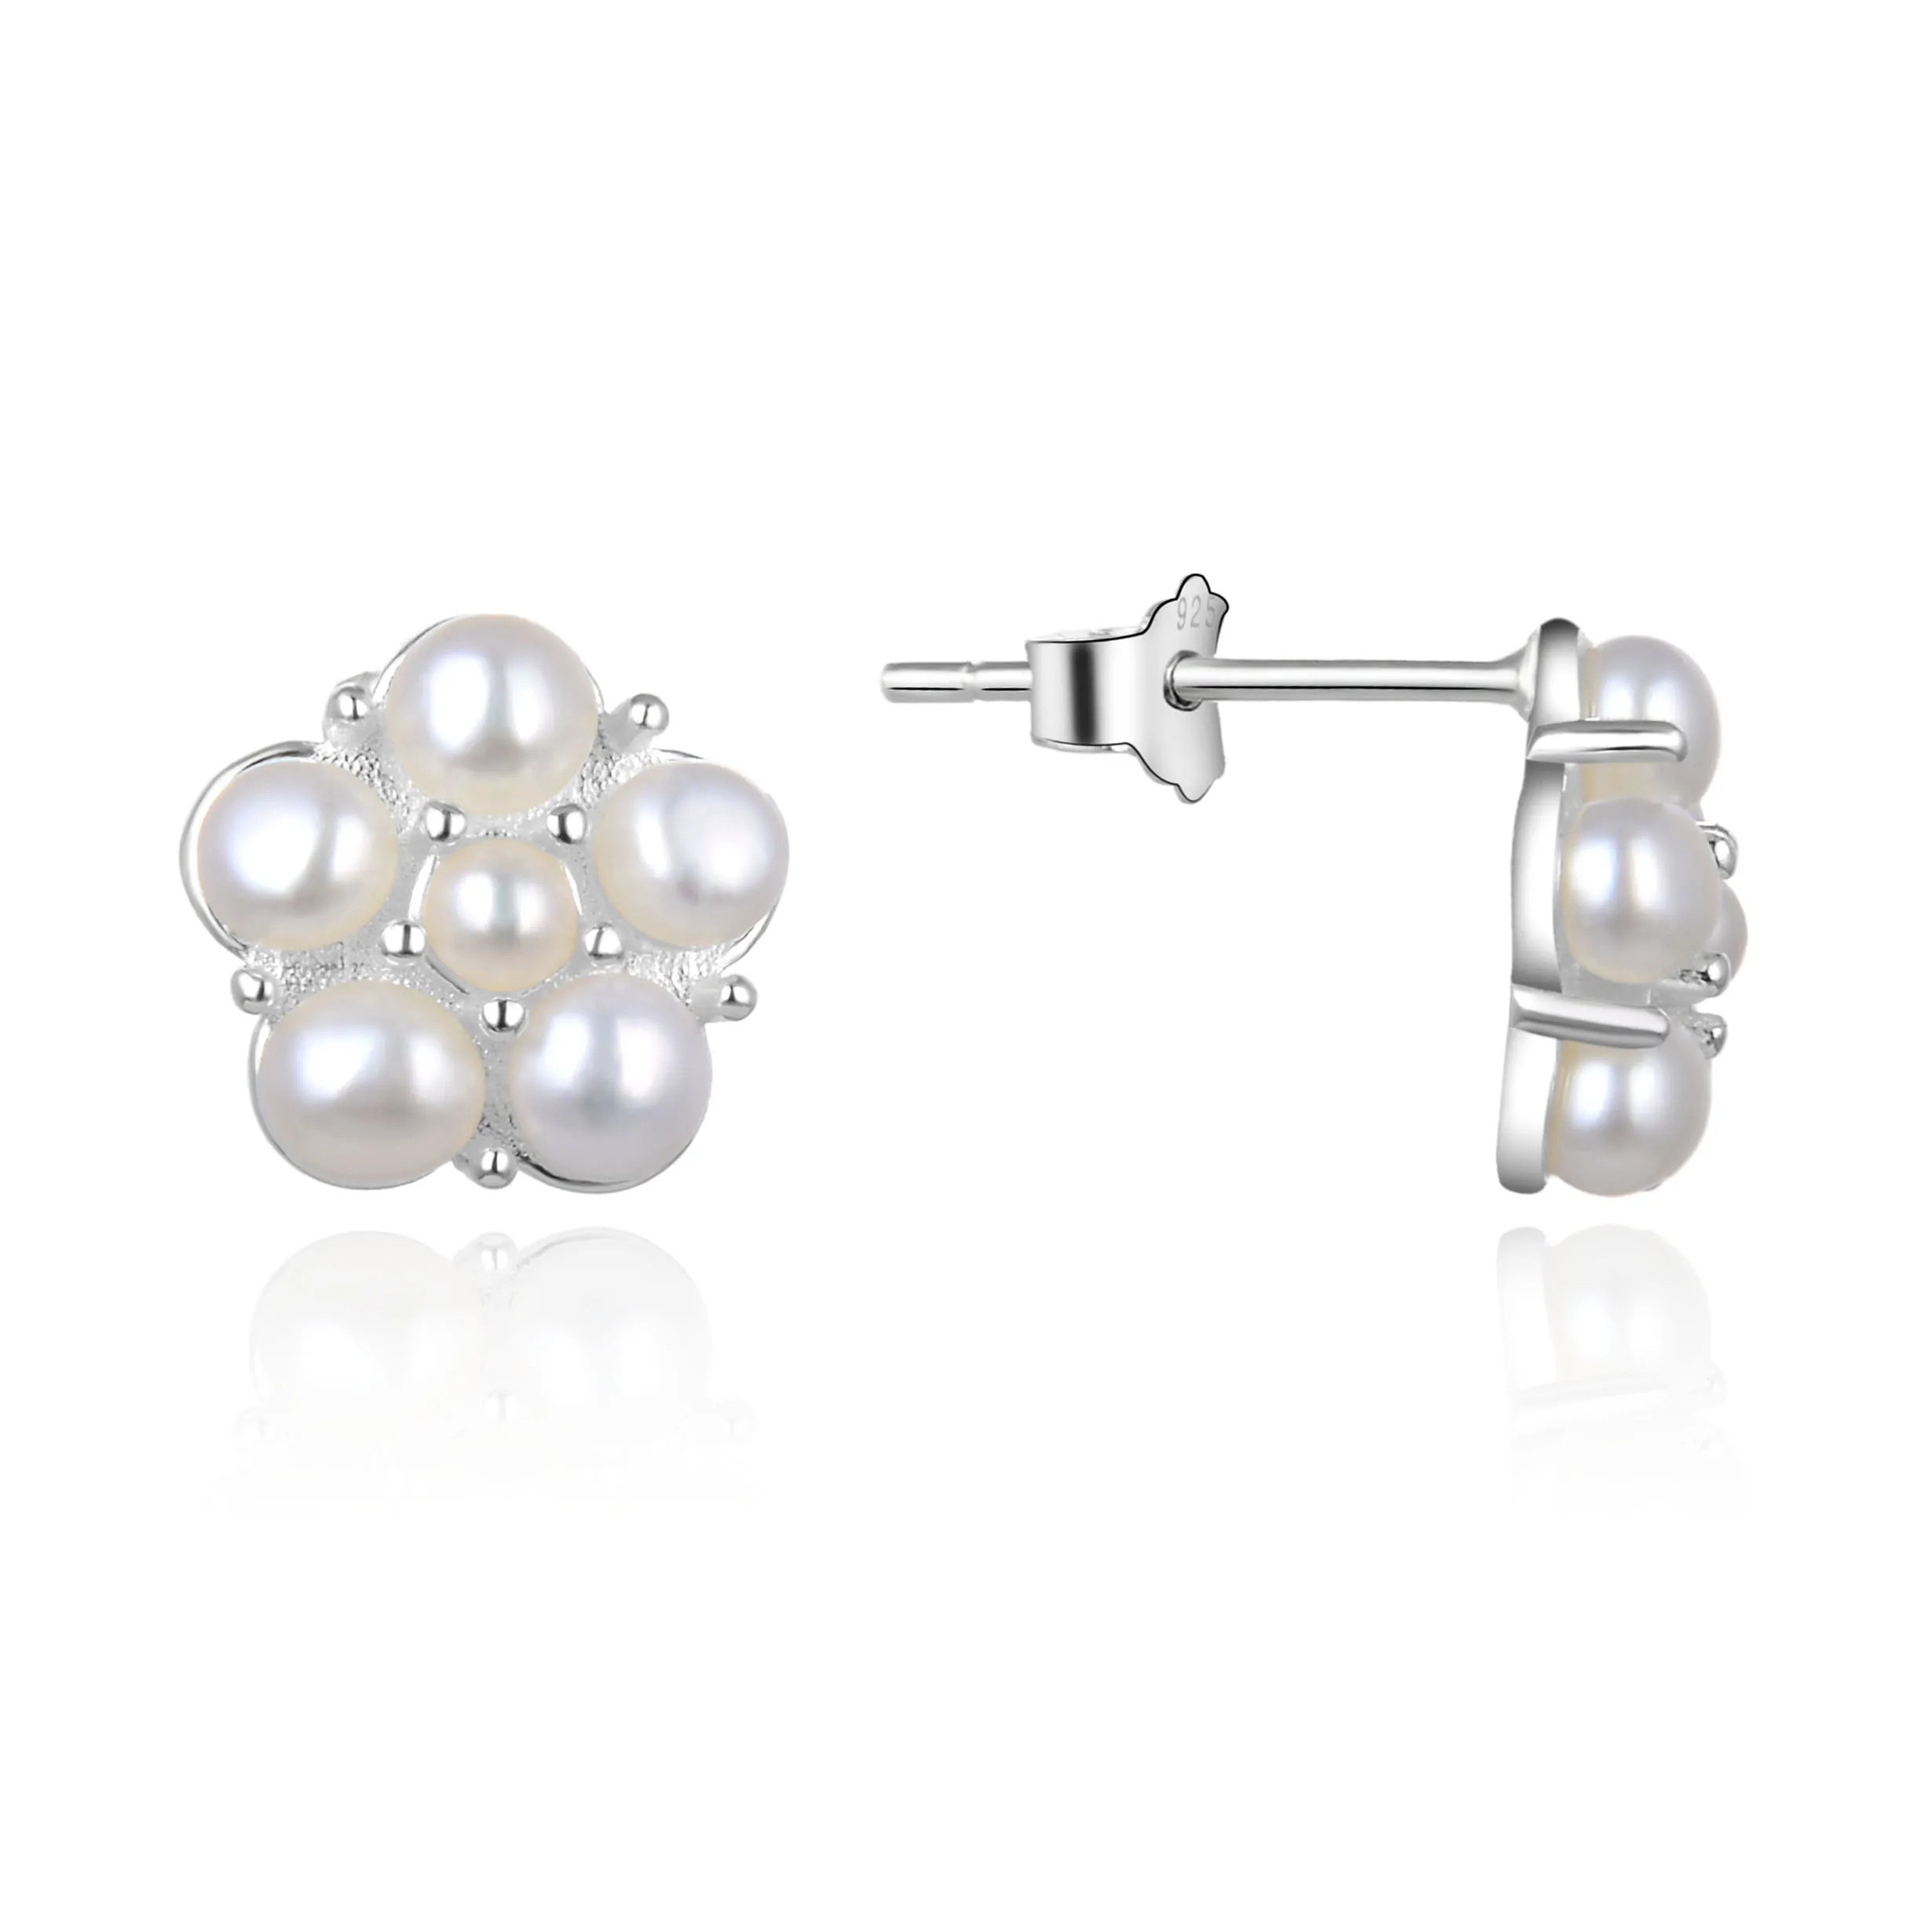 

Beritafon 925 Sterling Silver Freshwater Pearl Stud Earring for Women or Girls Gift